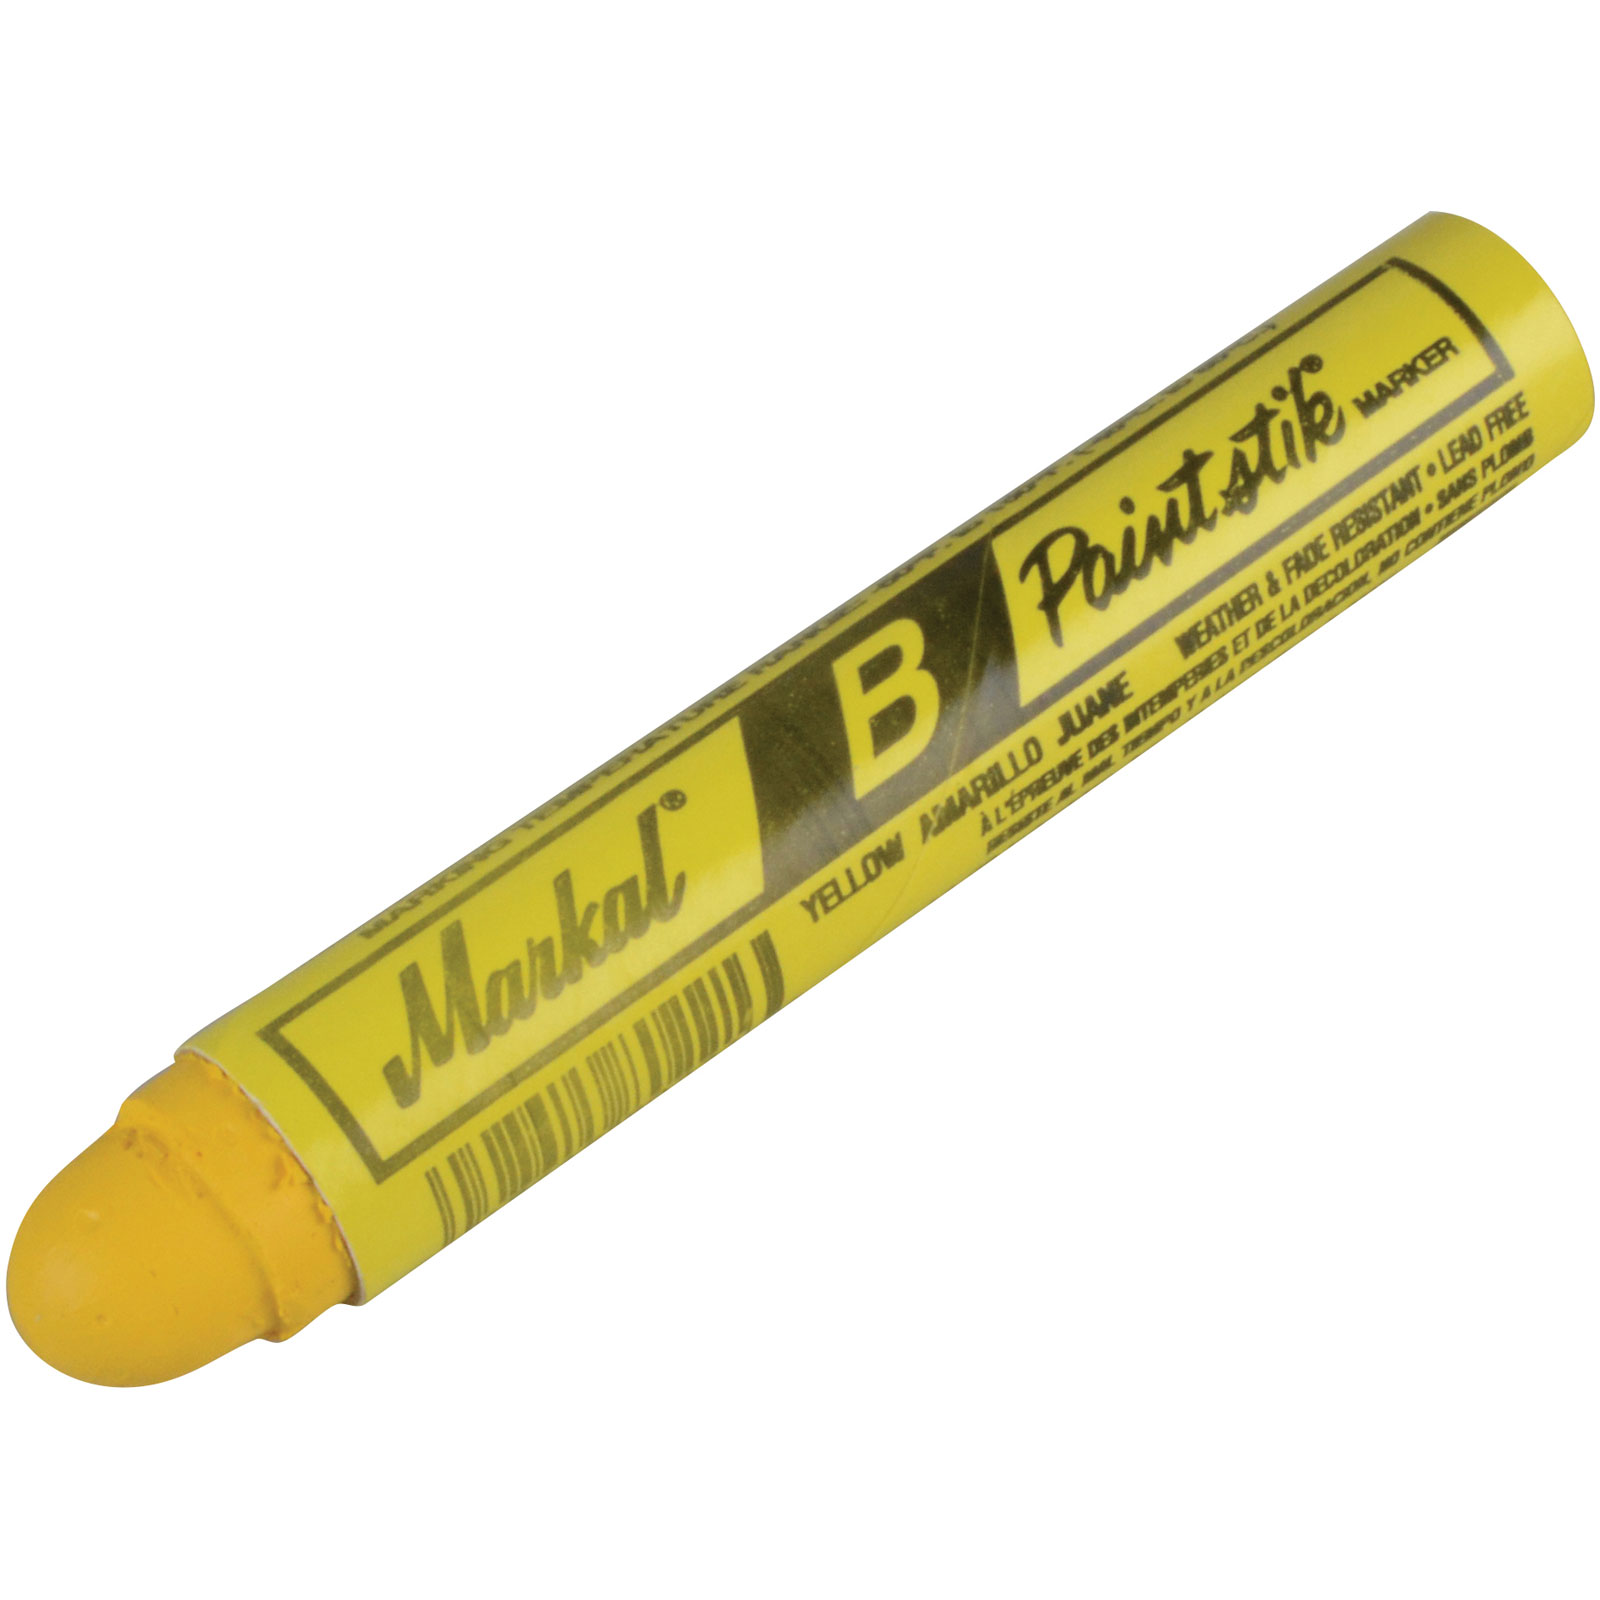 Markal 96653 Stylmark Tube Marker, 1/8, Yellow